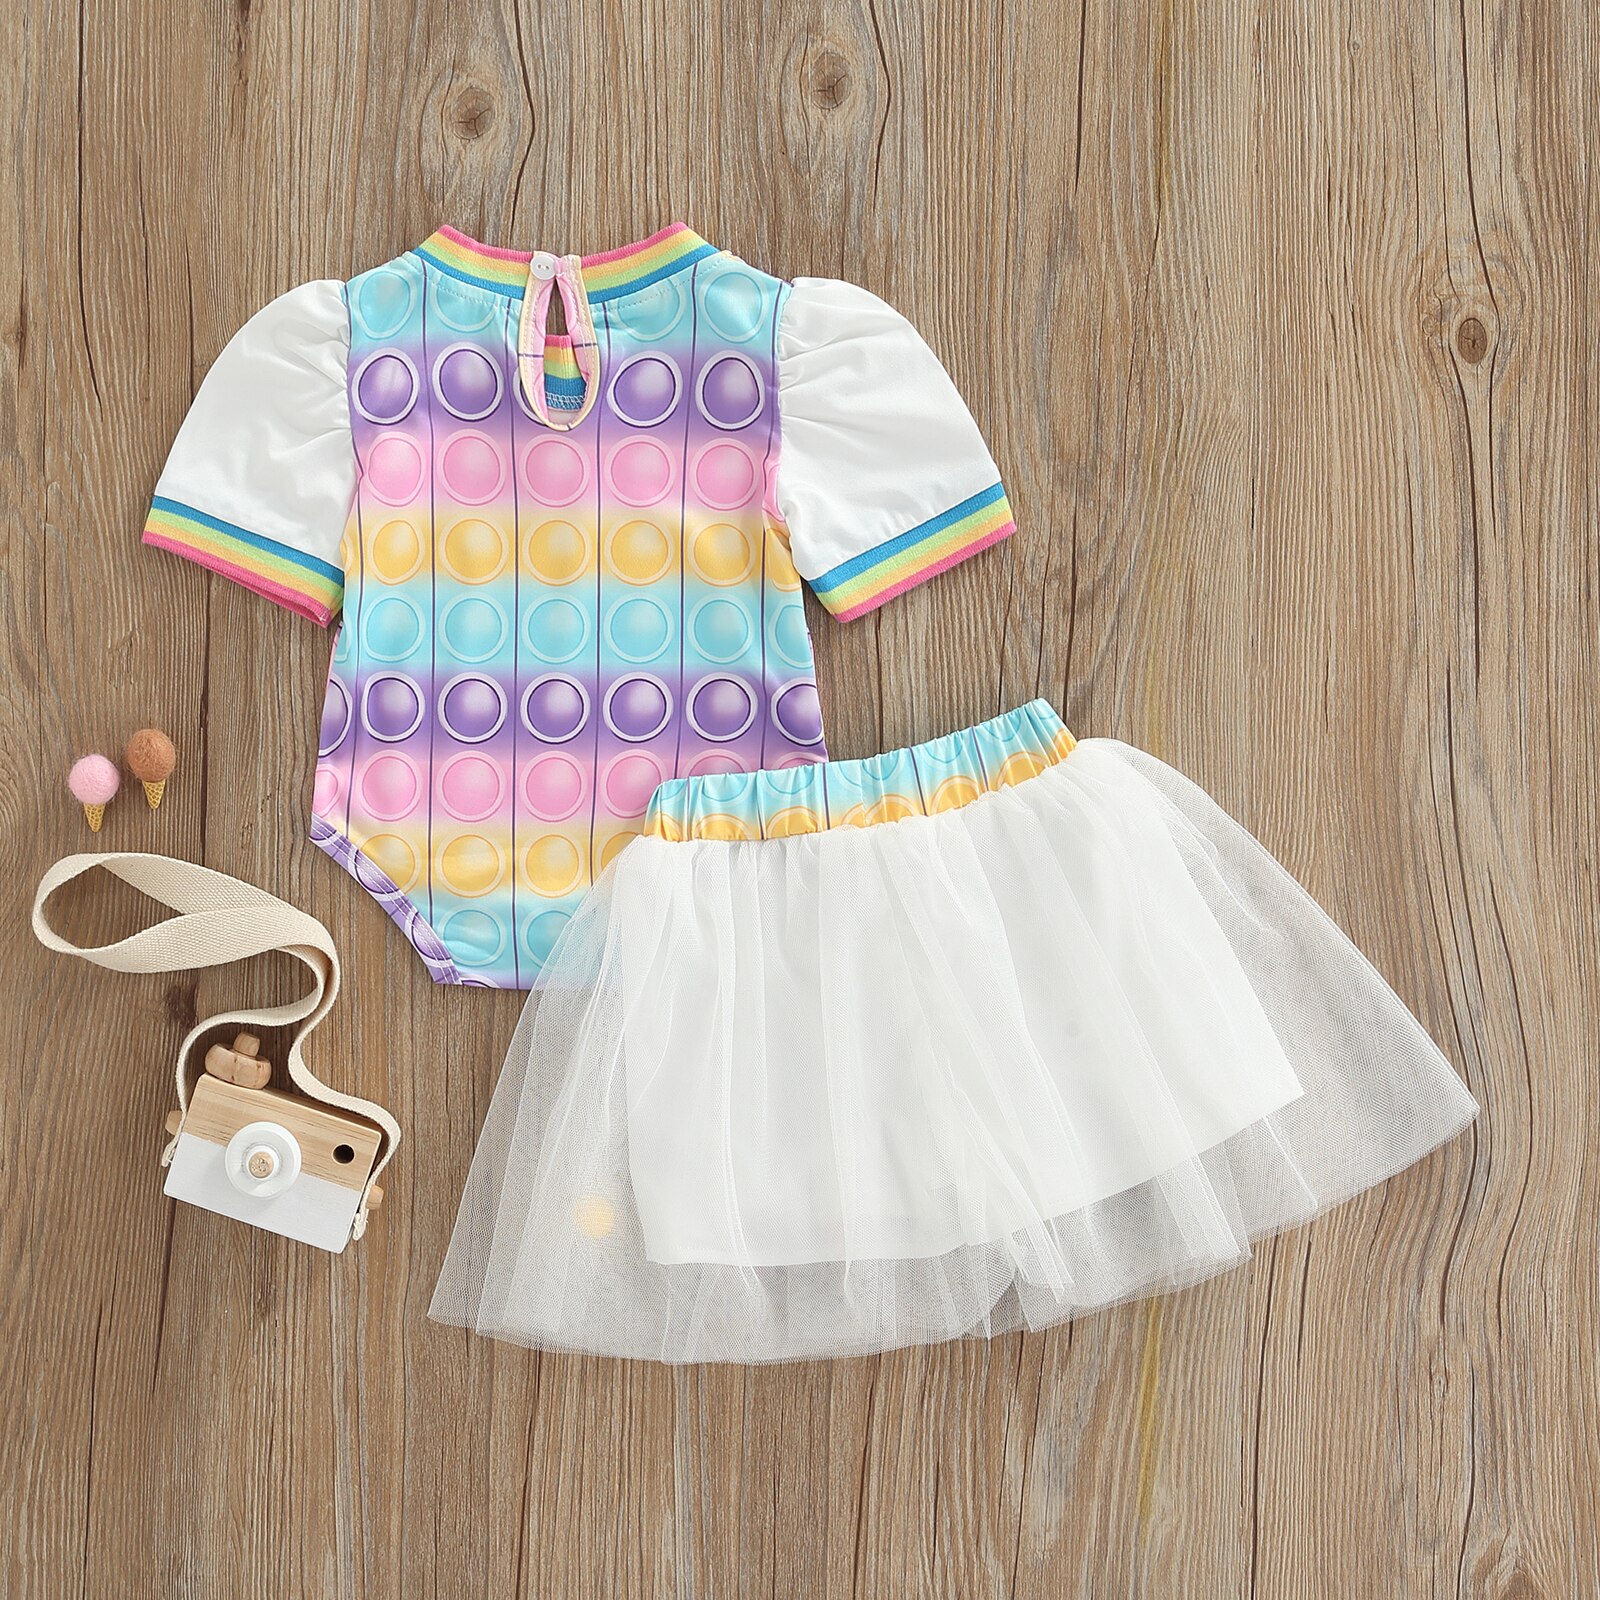 Citgeett-Summer-Kids-Girls-Short-Skirt-Suit-Pattern-Rainbow-Stripes-Short-Sleeves-Romper-Jumpsuit-Tutu-Skirt-1